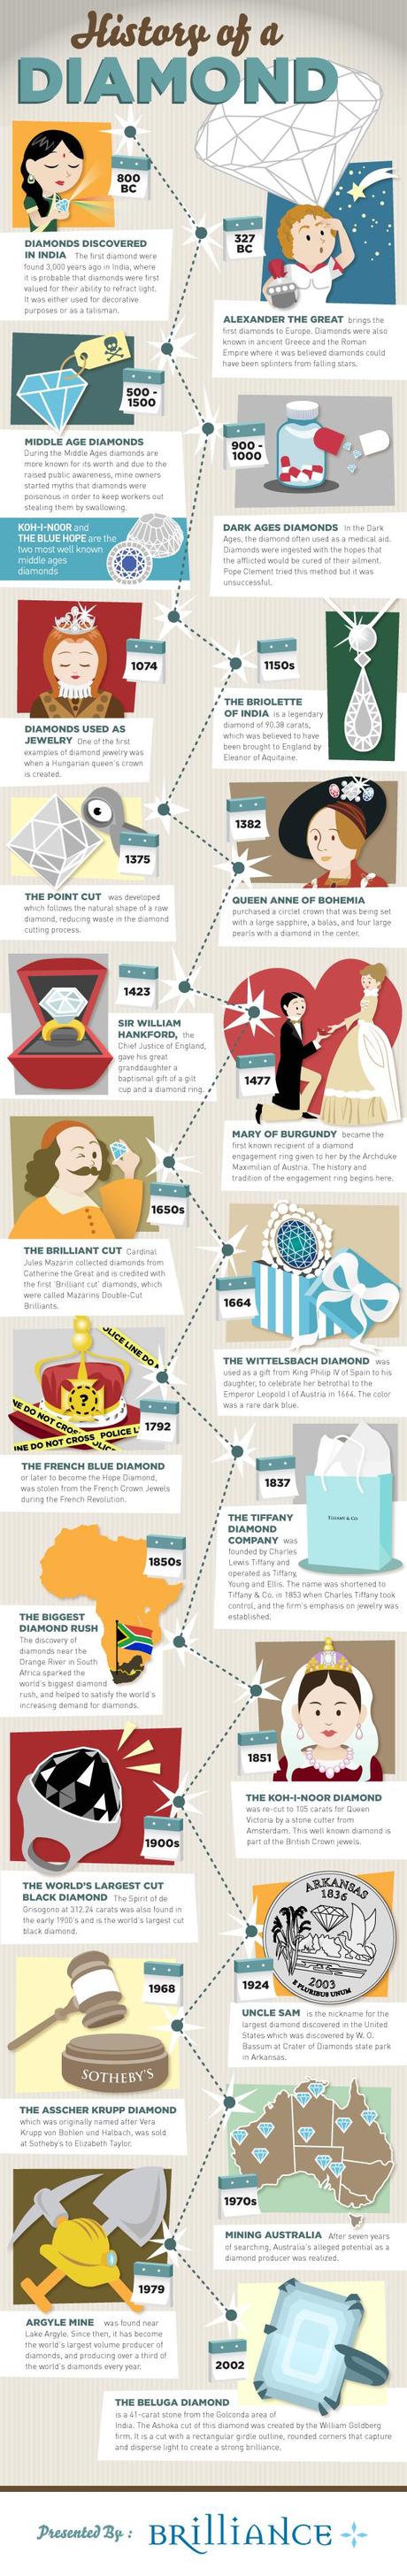 Infographic Timeline of Diamonds